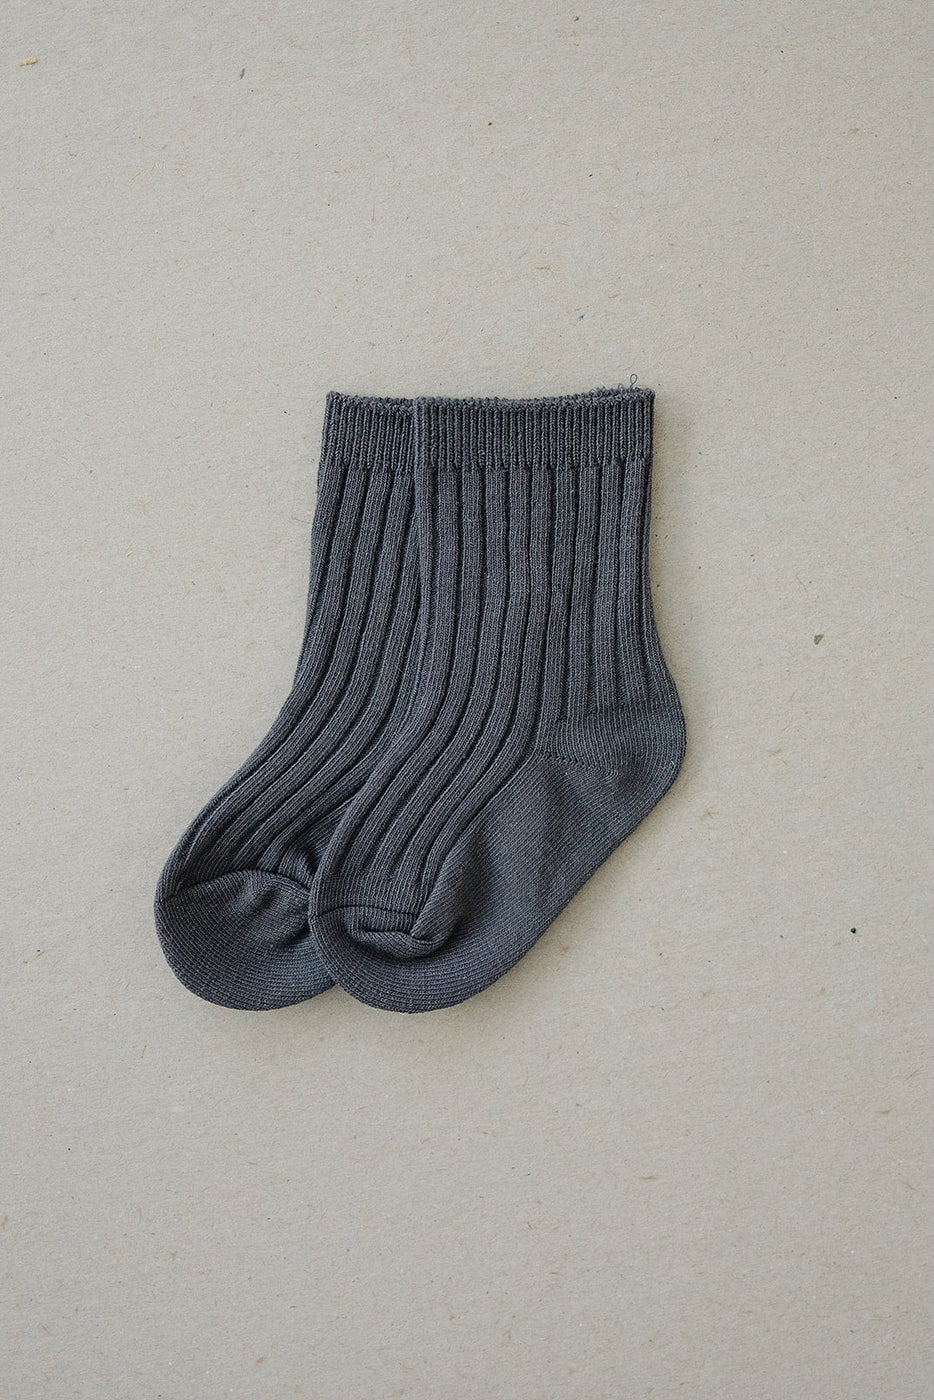 a pair of grey socks